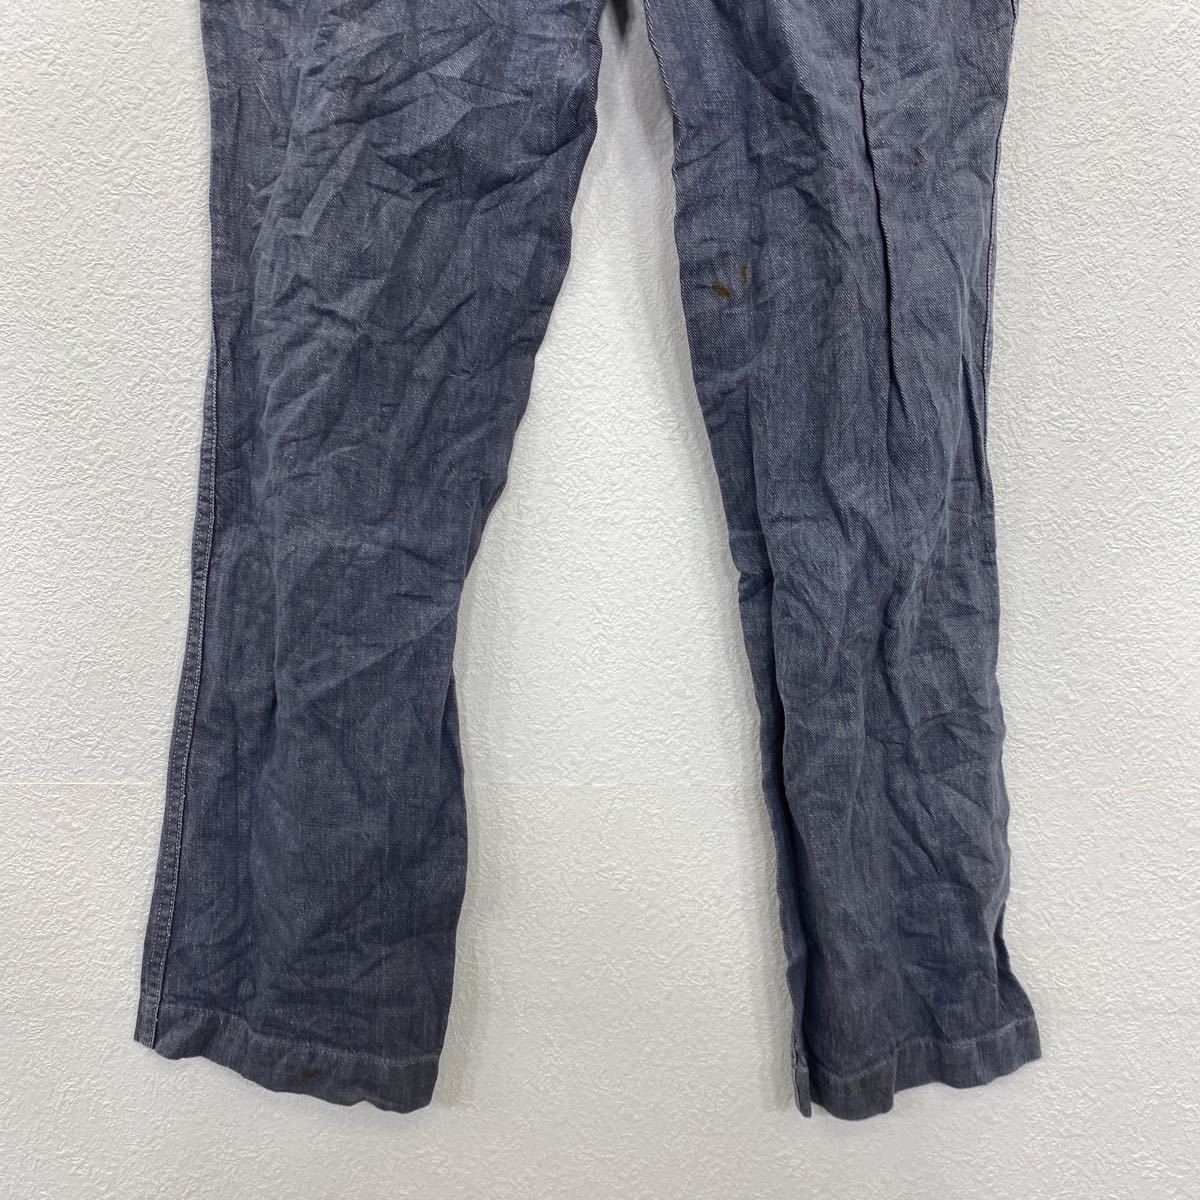  Work * painter's pants W29 ранг женский евро голубой темно-синий б/у одежда . America скупка 2303-345